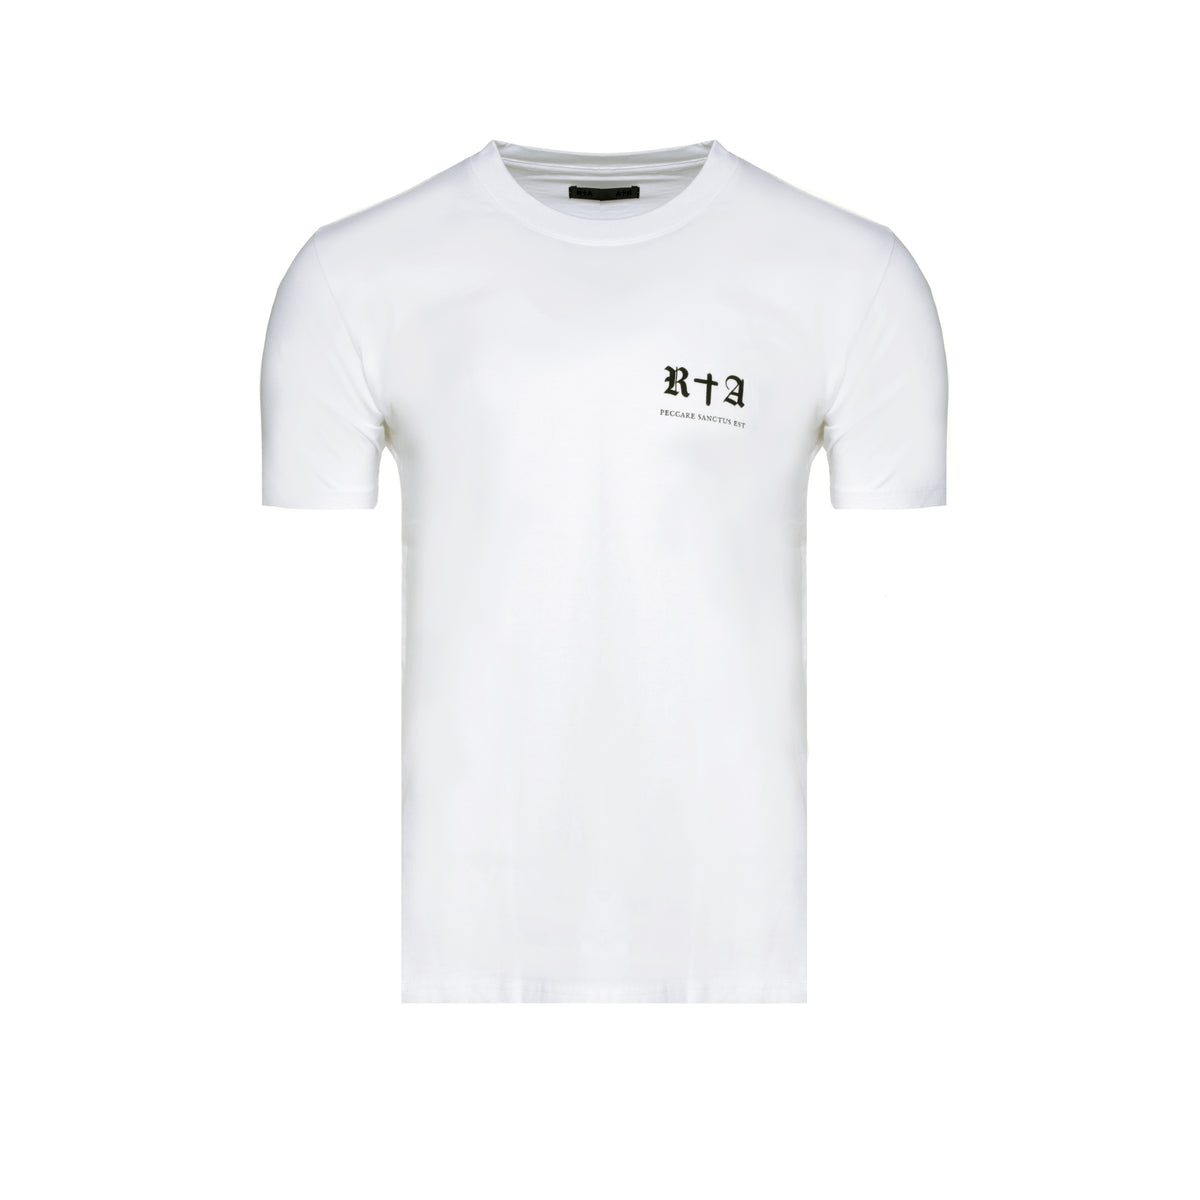 RtA Brand Liam Latin Logo S/S Men's White T-Shirt - SIZE Boutique